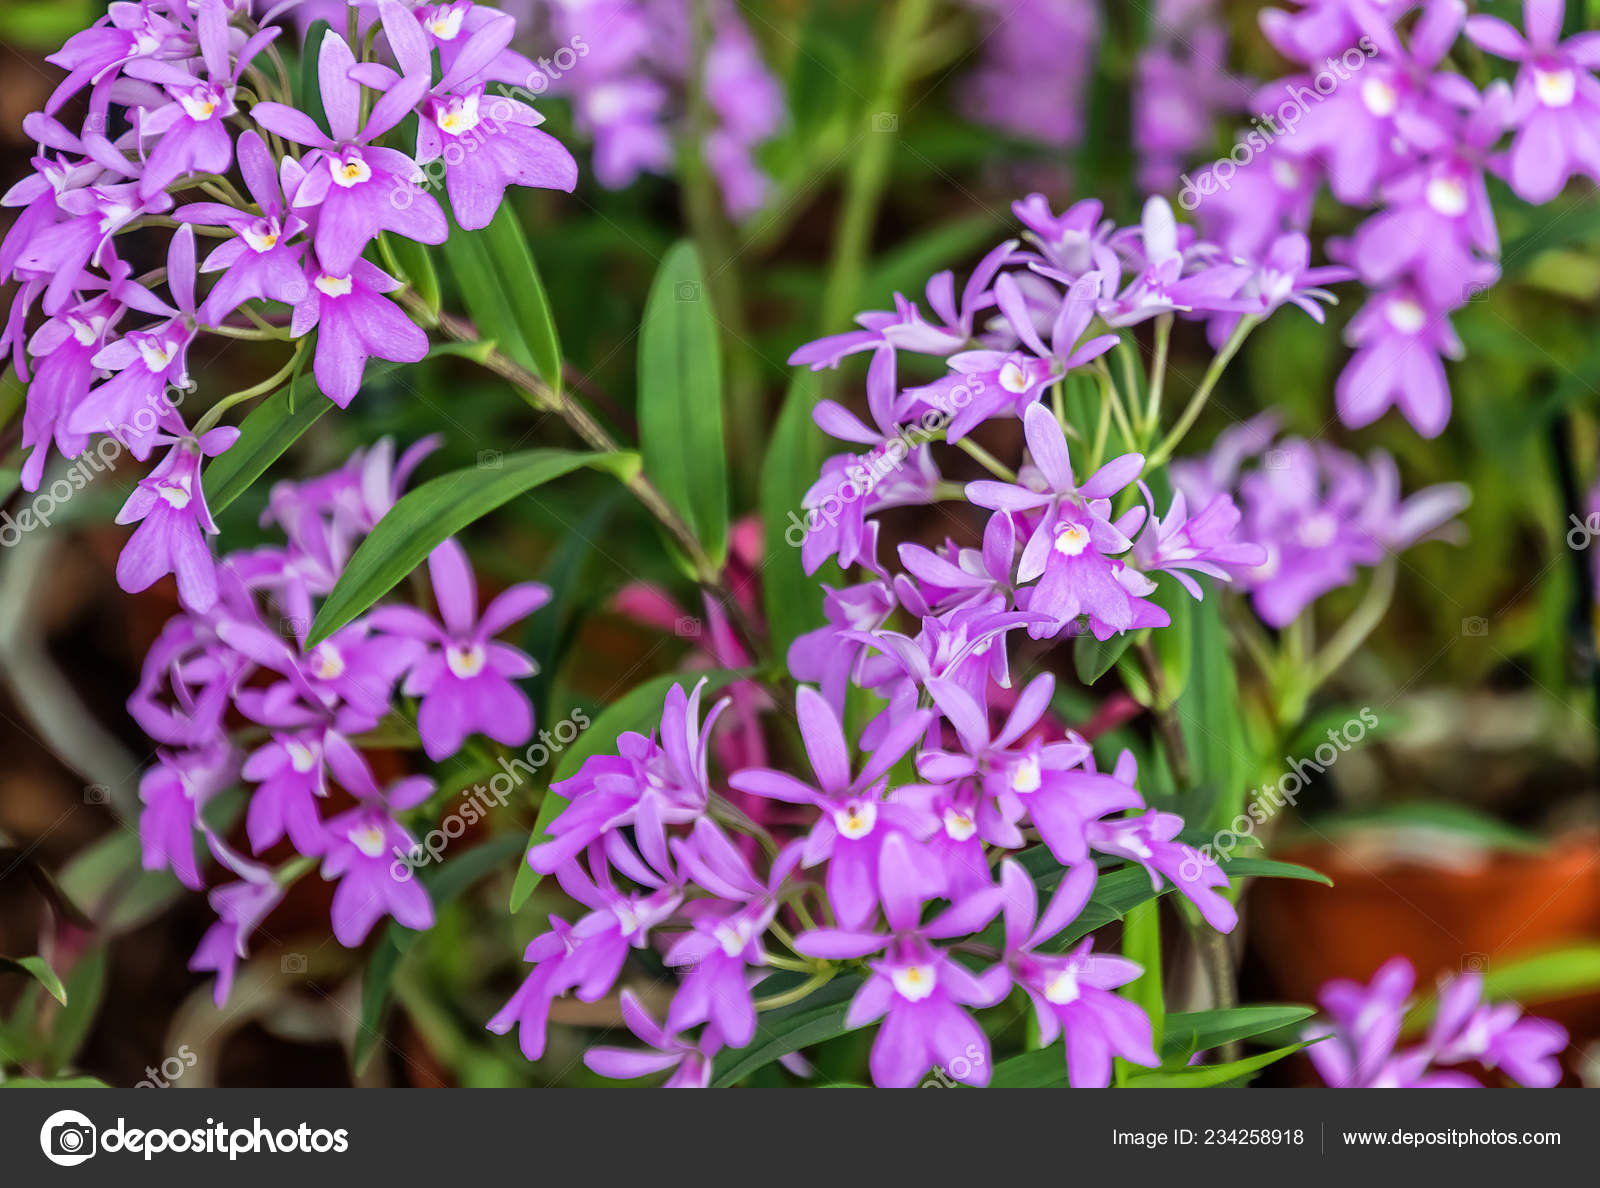 Fotos de Epidendrum, Imagens de Epidendrum sem royalties | Depositphotos